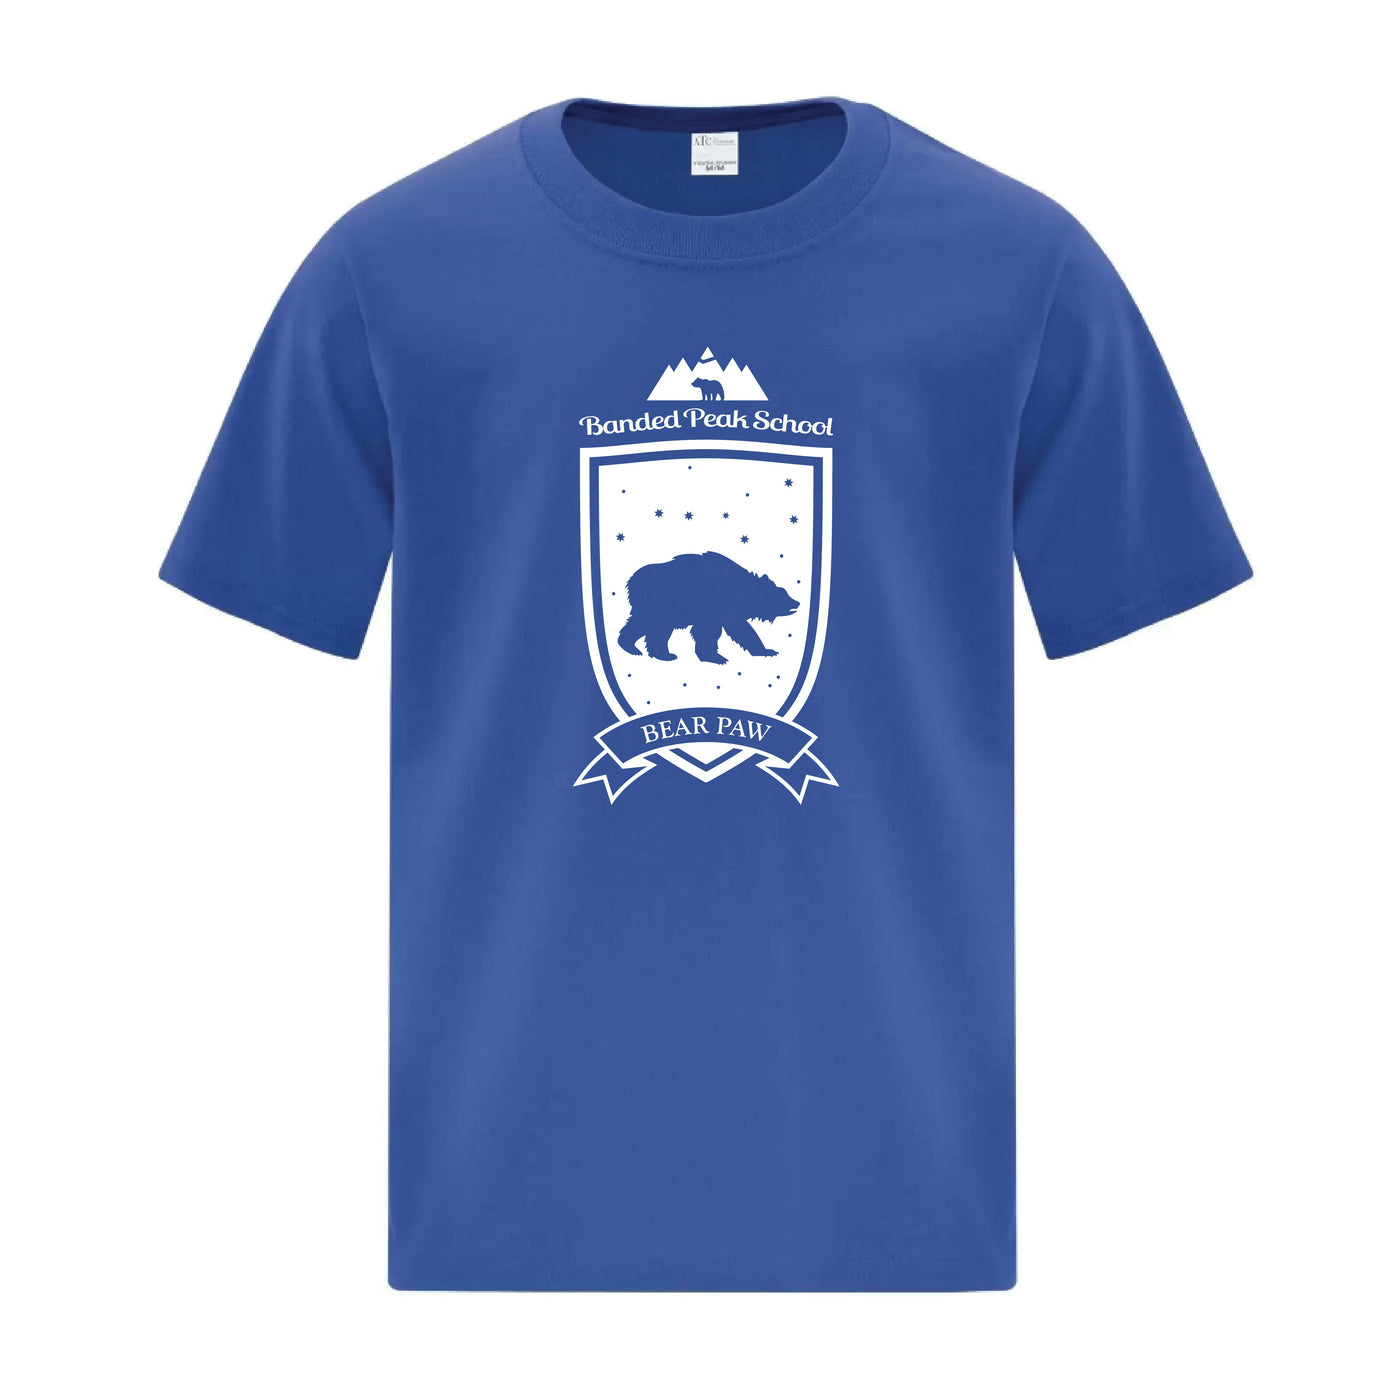 Banded Peak School - Tee-shirt Bear Paw House - T-shirt technique